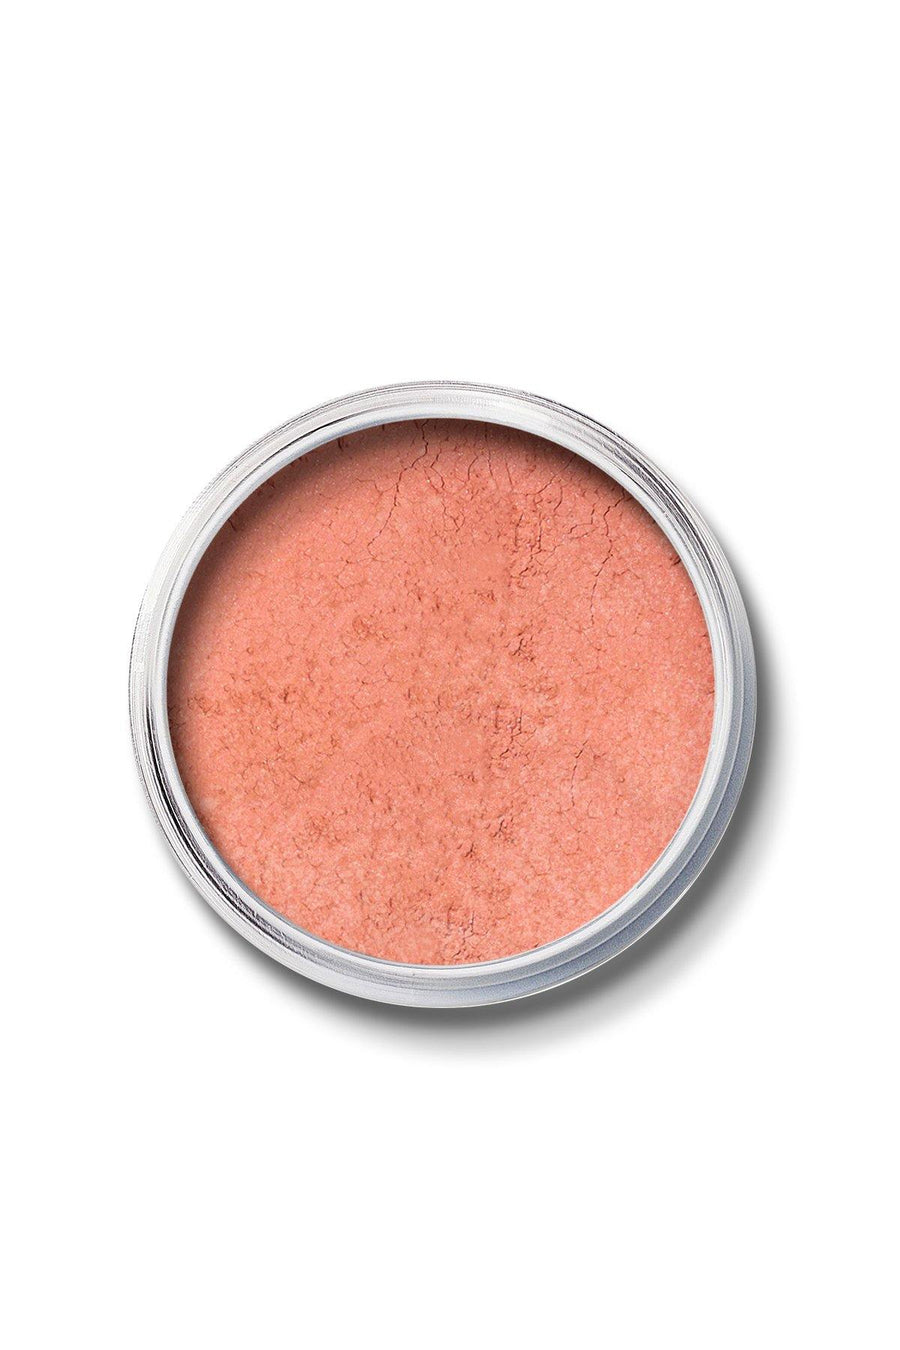 Mineral Blush #5 - Desert Rose - Blend Mineral Cosmetics